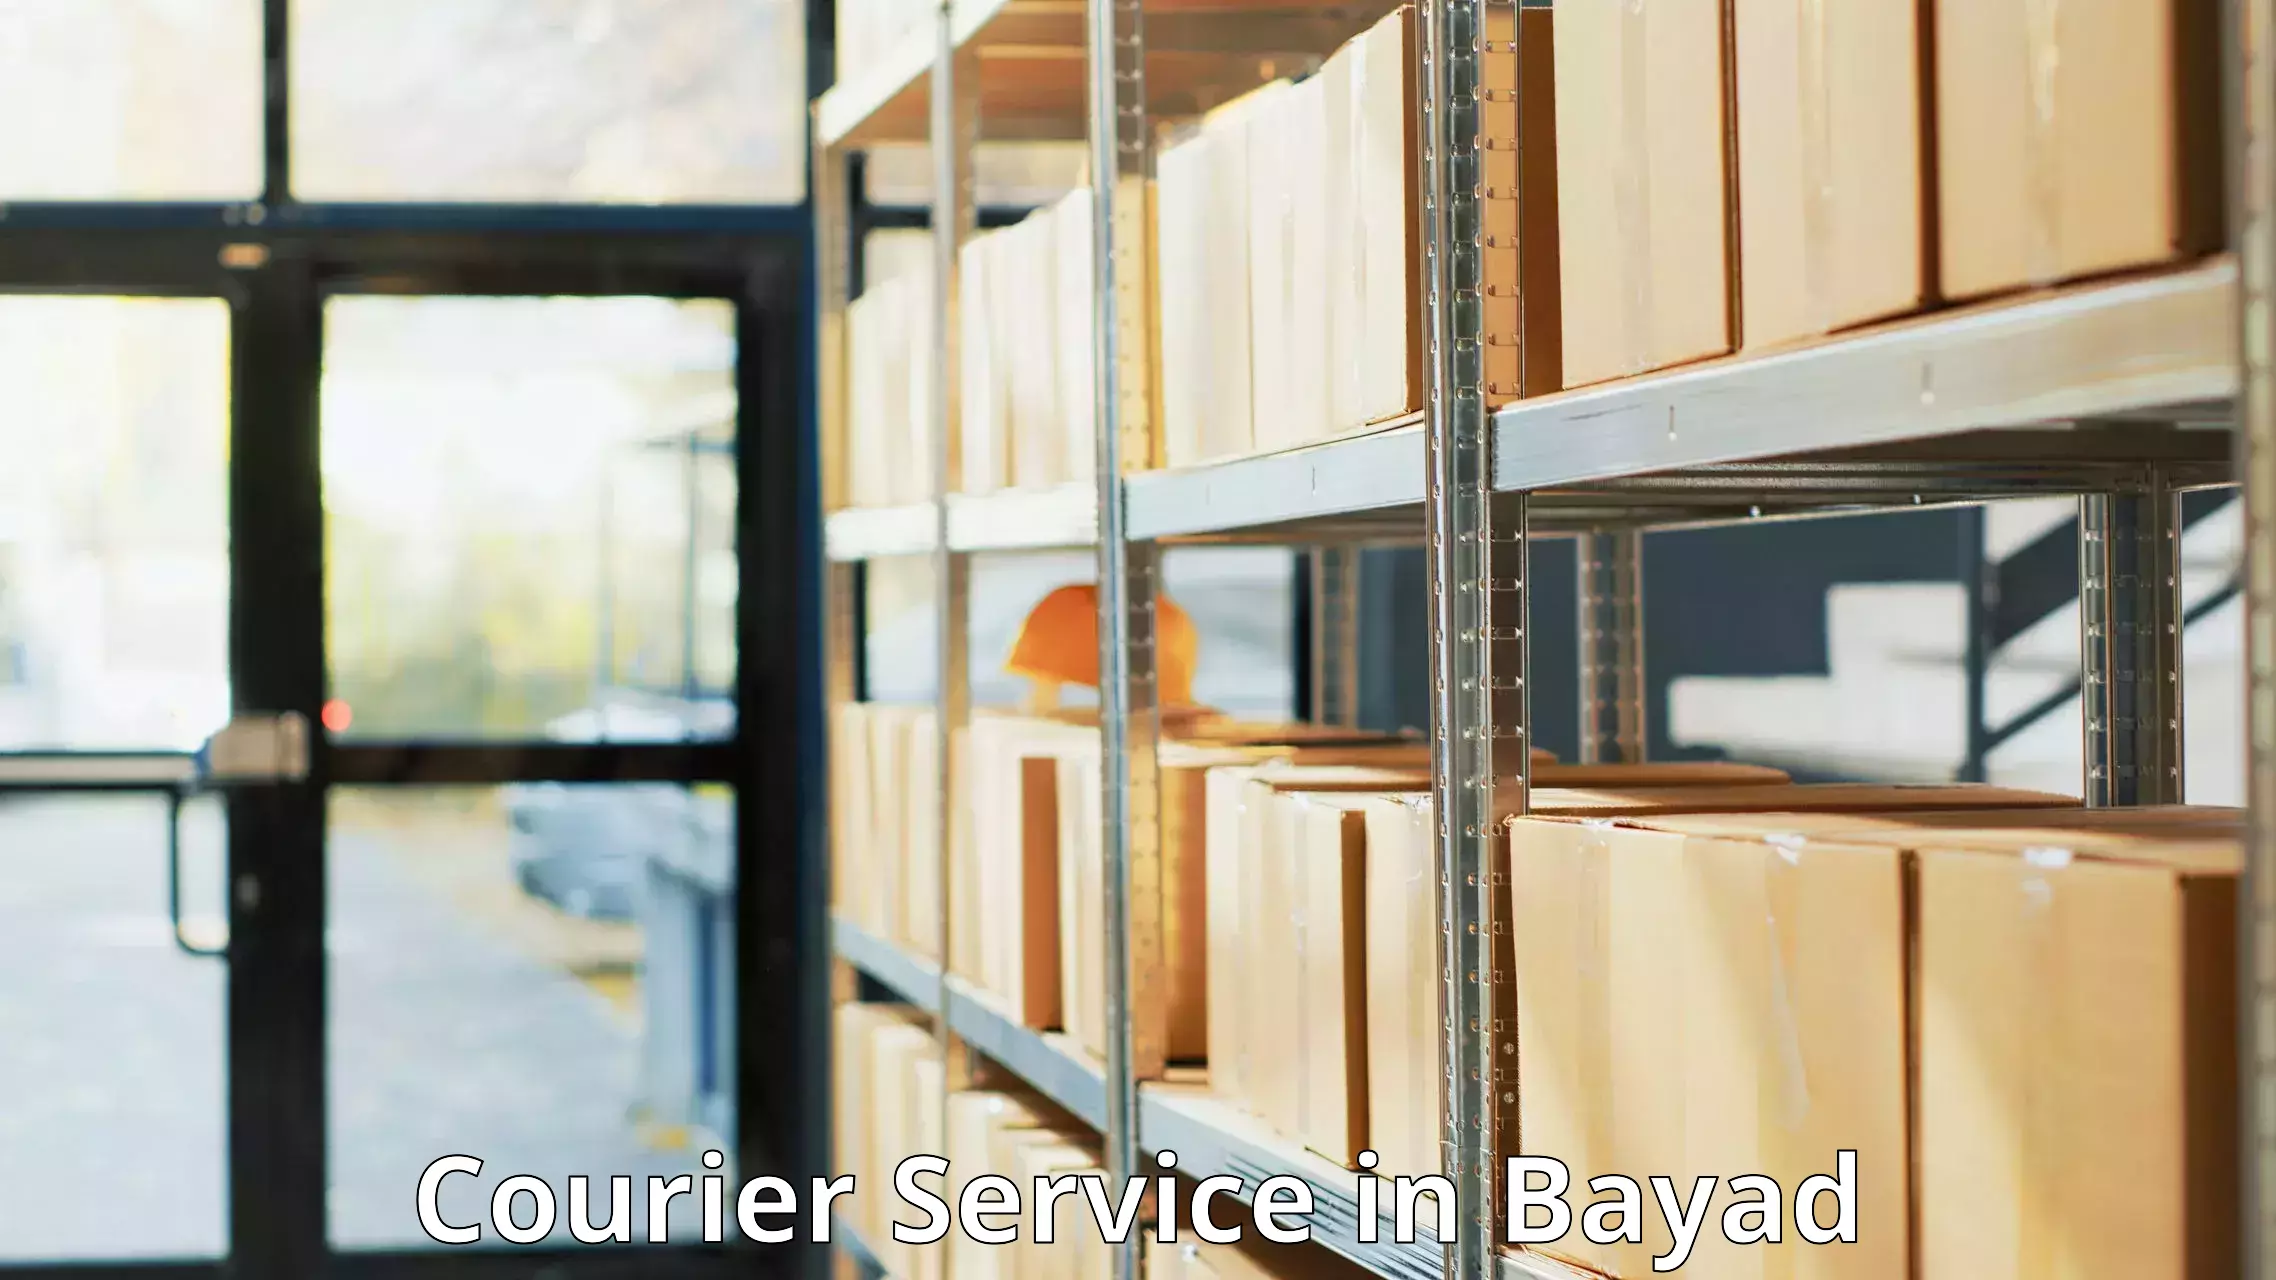 Doorstep delivery service in Bayad